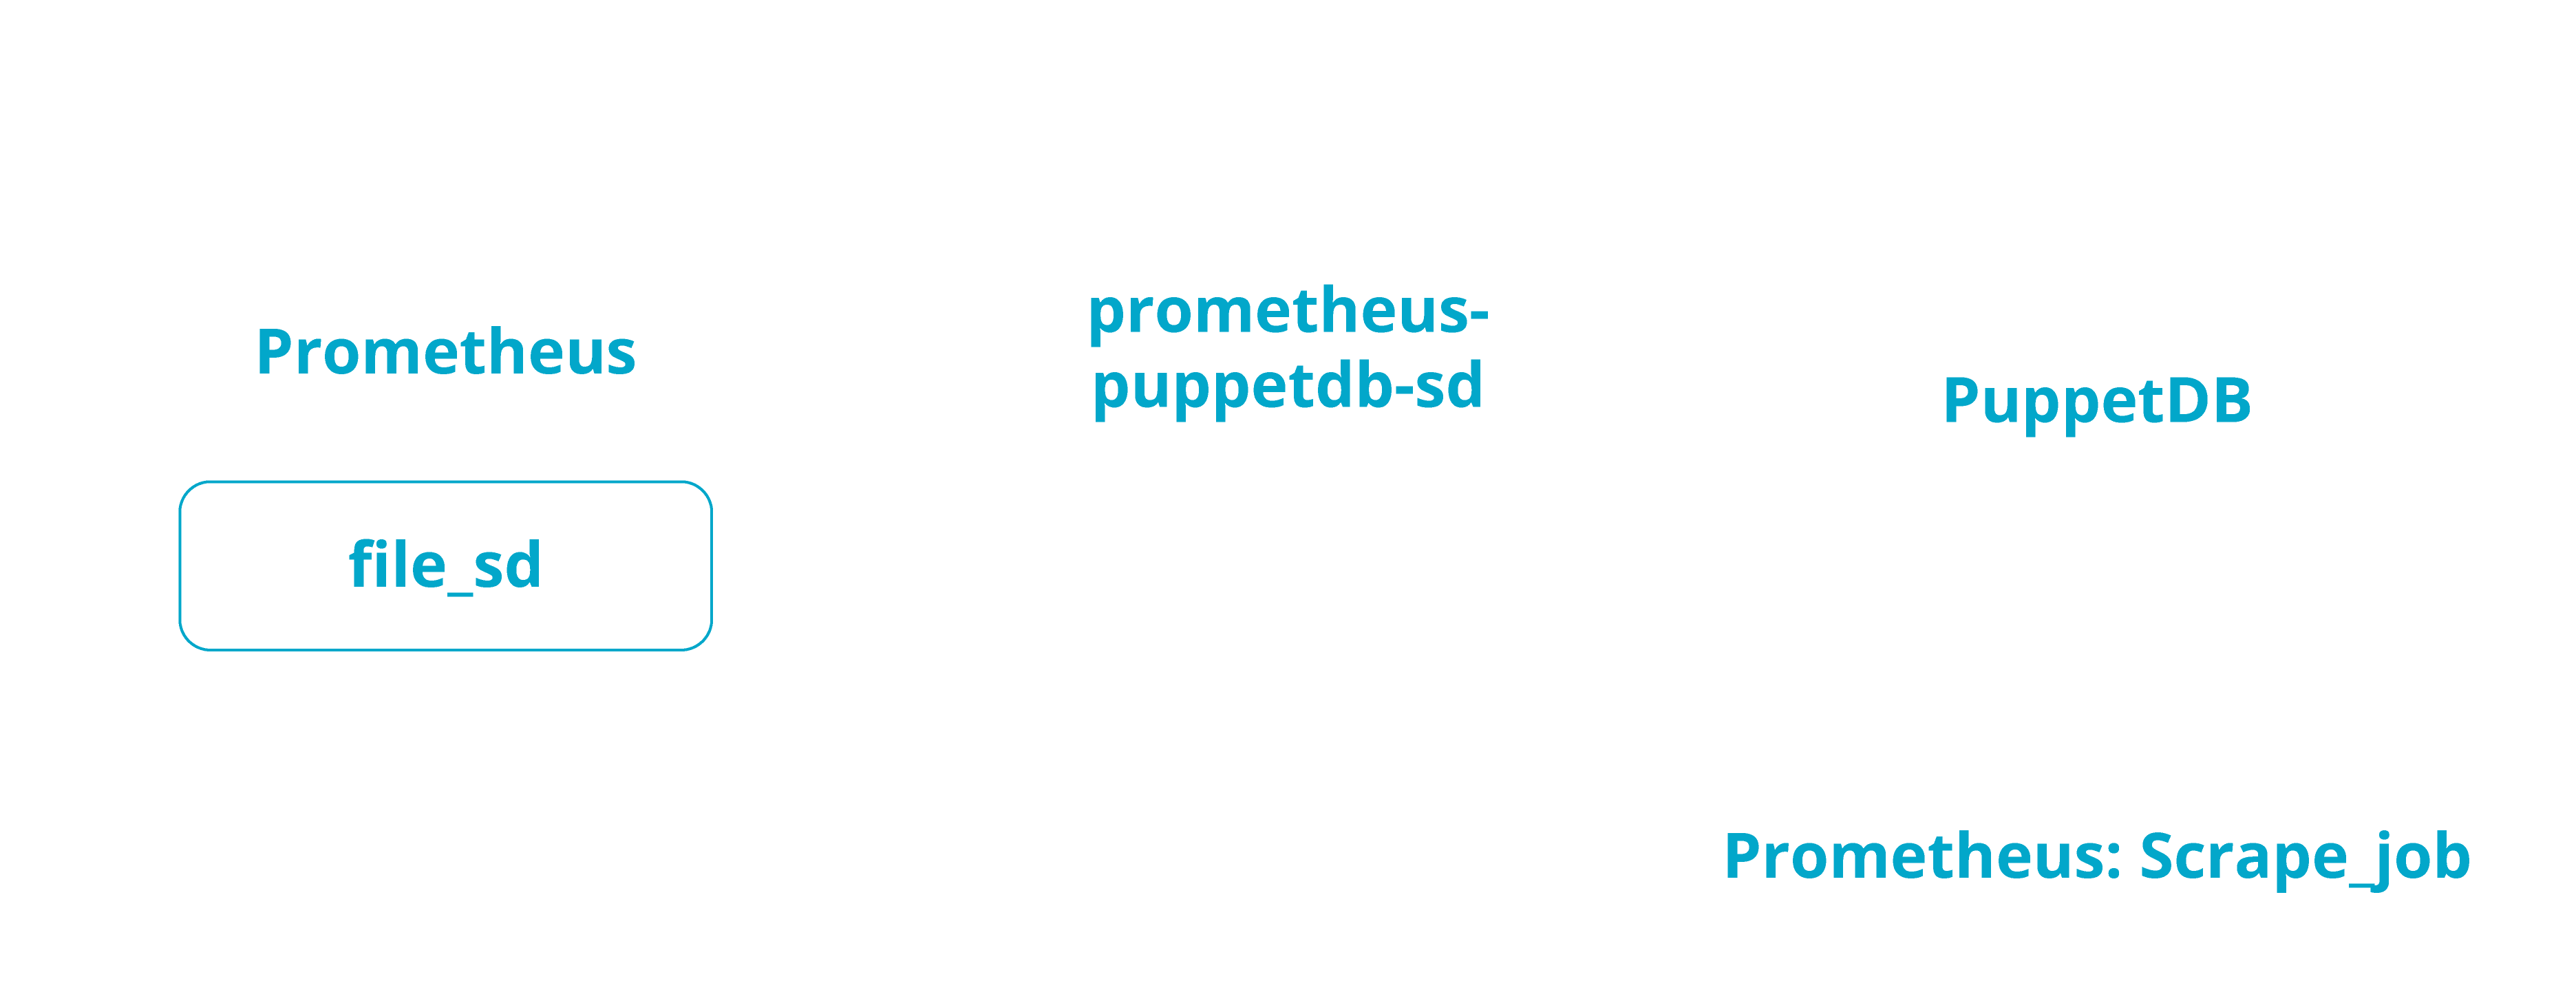 prometheus-puppetdb-sd